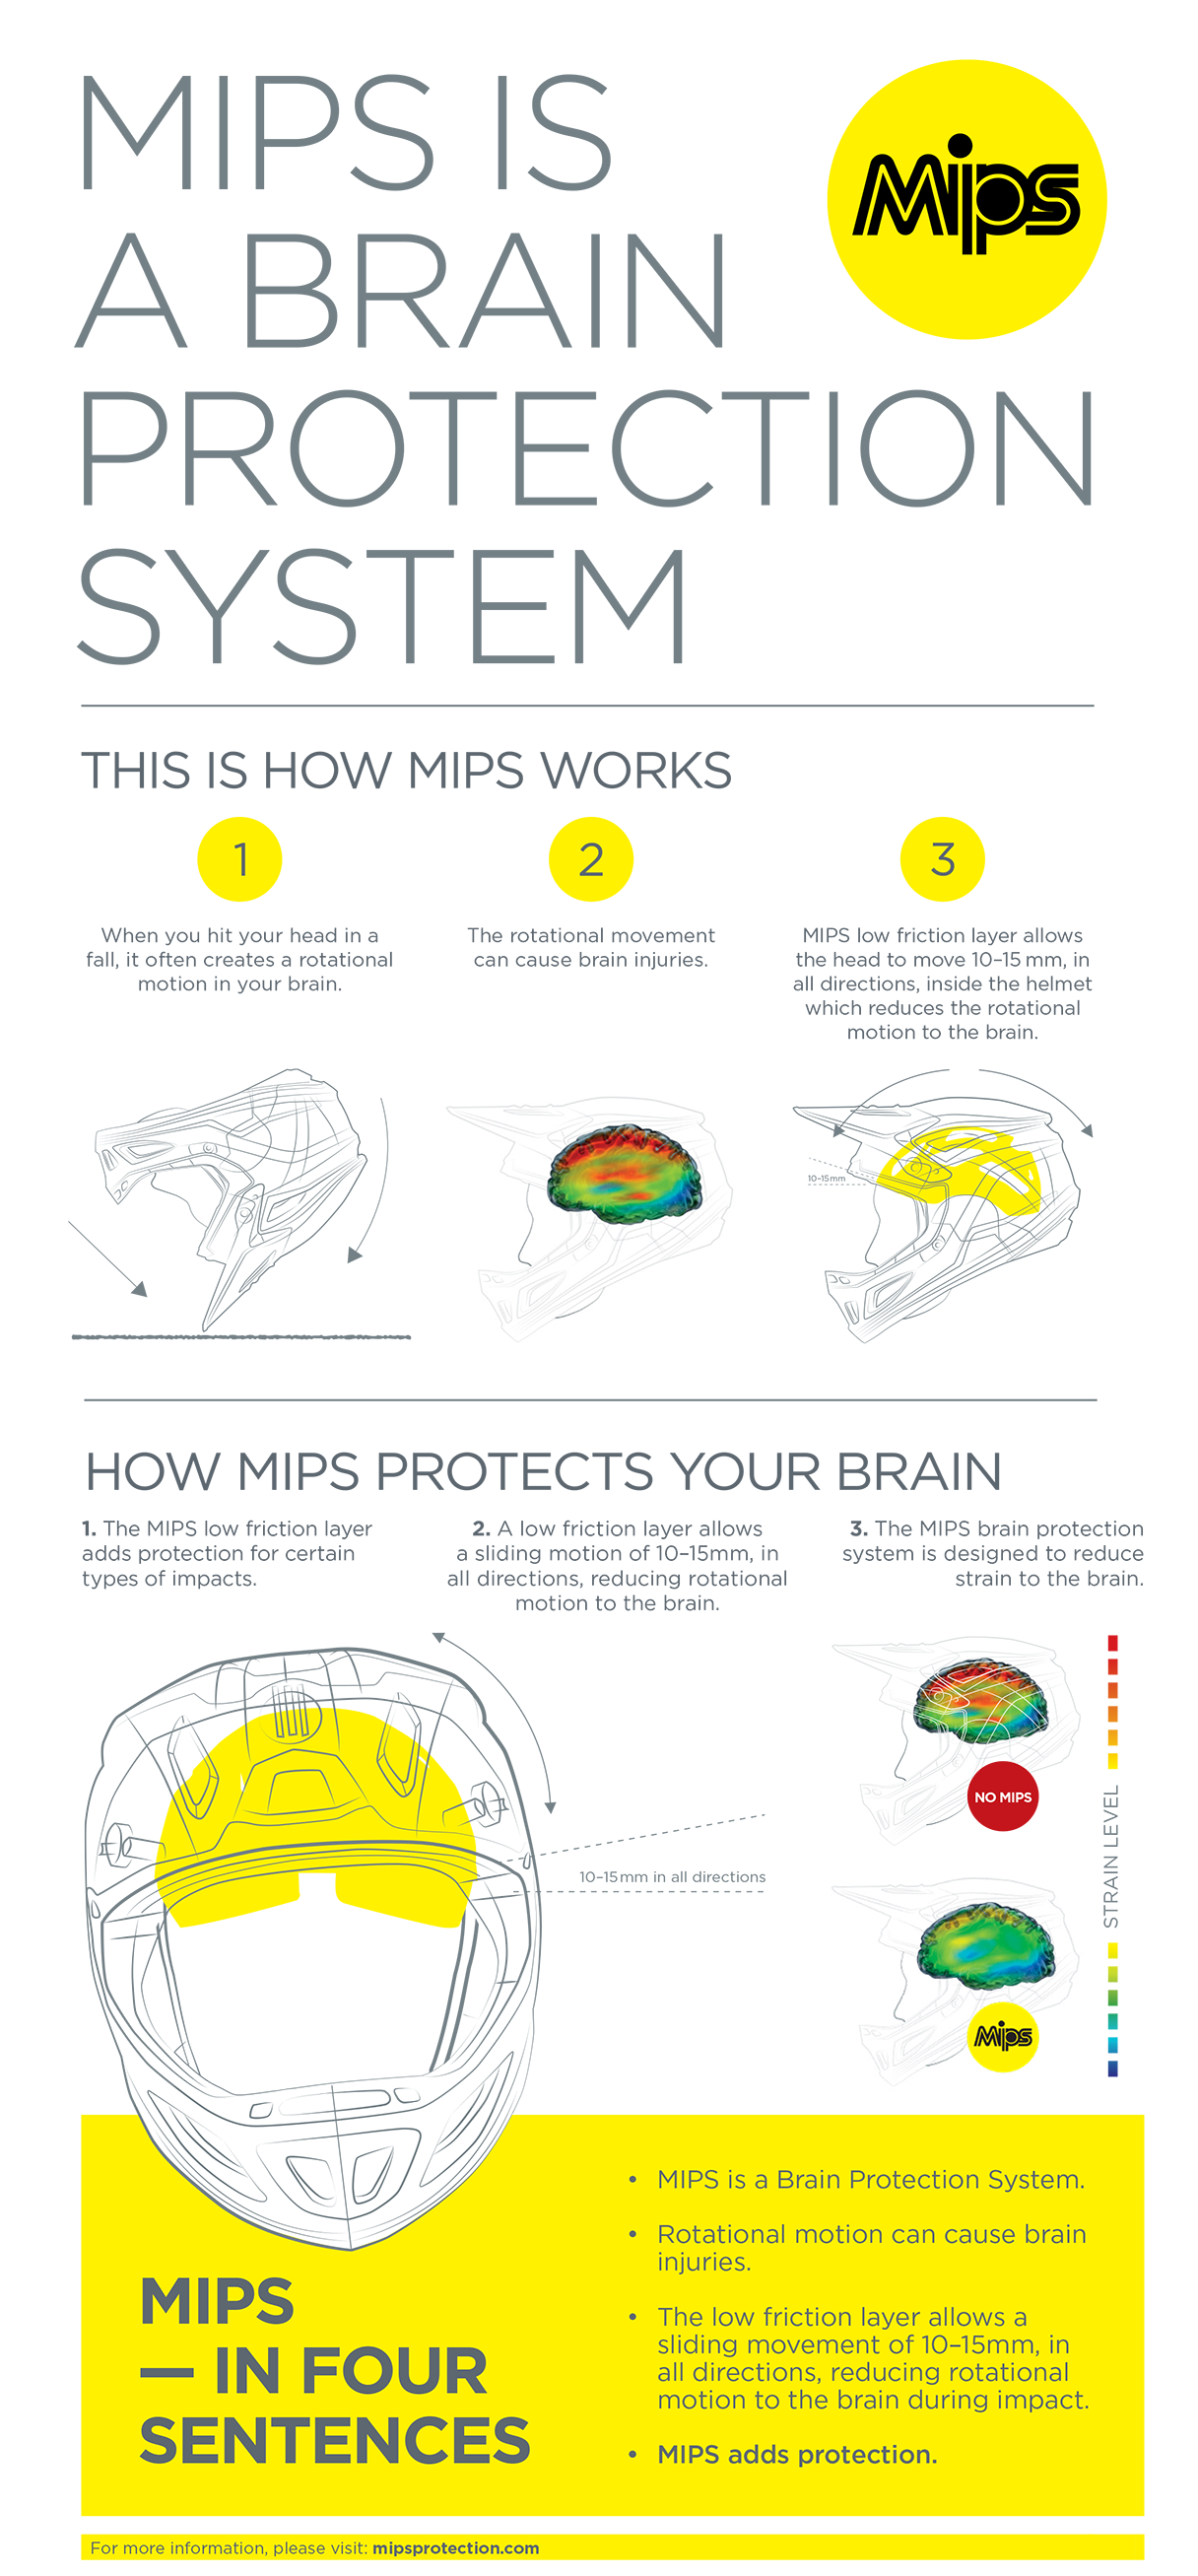 ALPINESTARS Supertech M8 Helmet - Echo - MIPS® - Black/Gray - XS 8302621-1146-XS